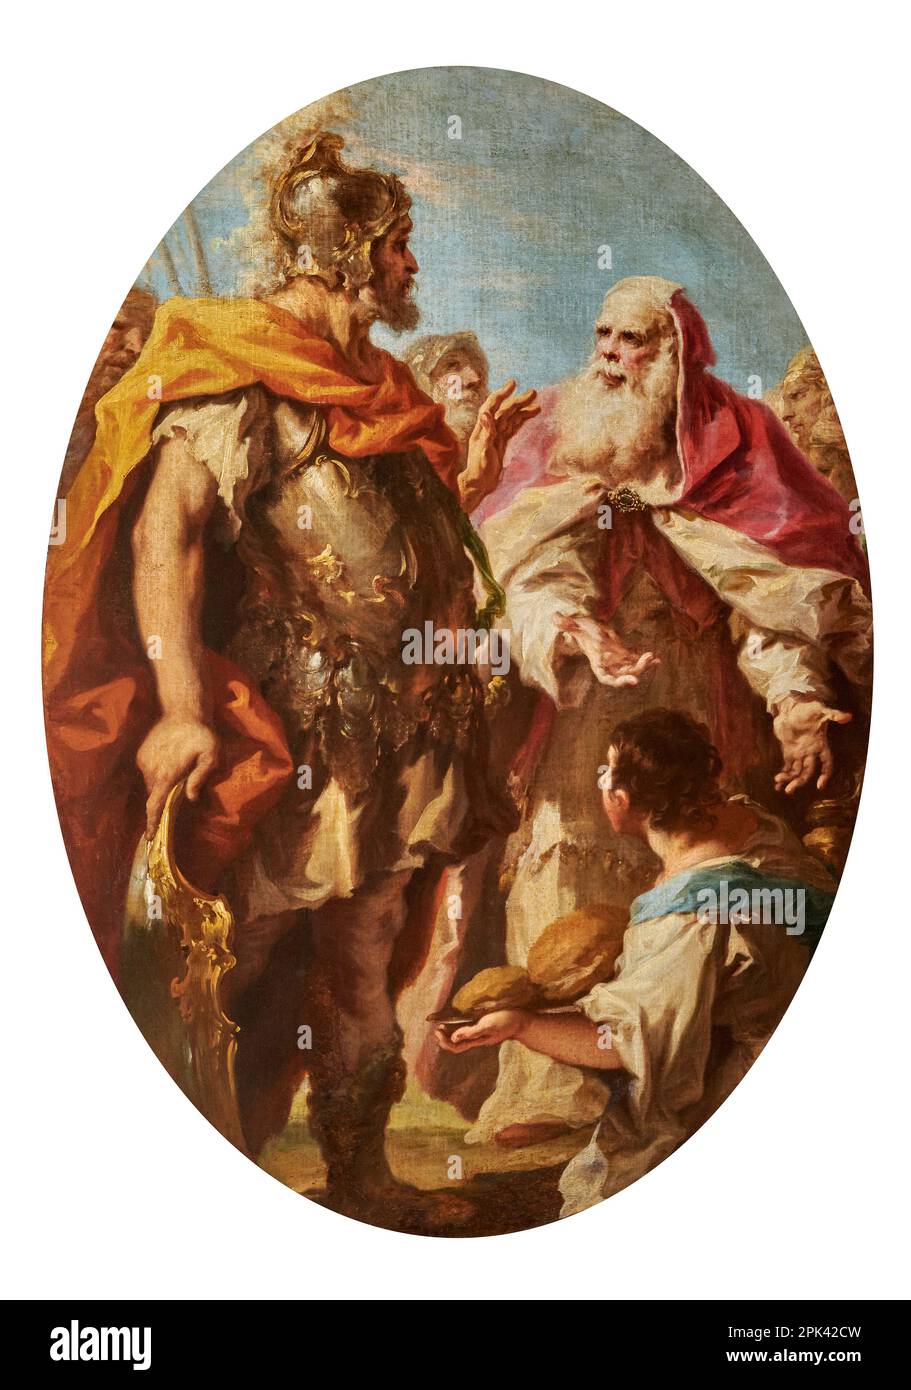 David riceve i pani da Achimelech - olio su tela - Giovanni Antonio Pellegrini - 1724 - Brescia, chiesa di S. Agata Banque D'Images